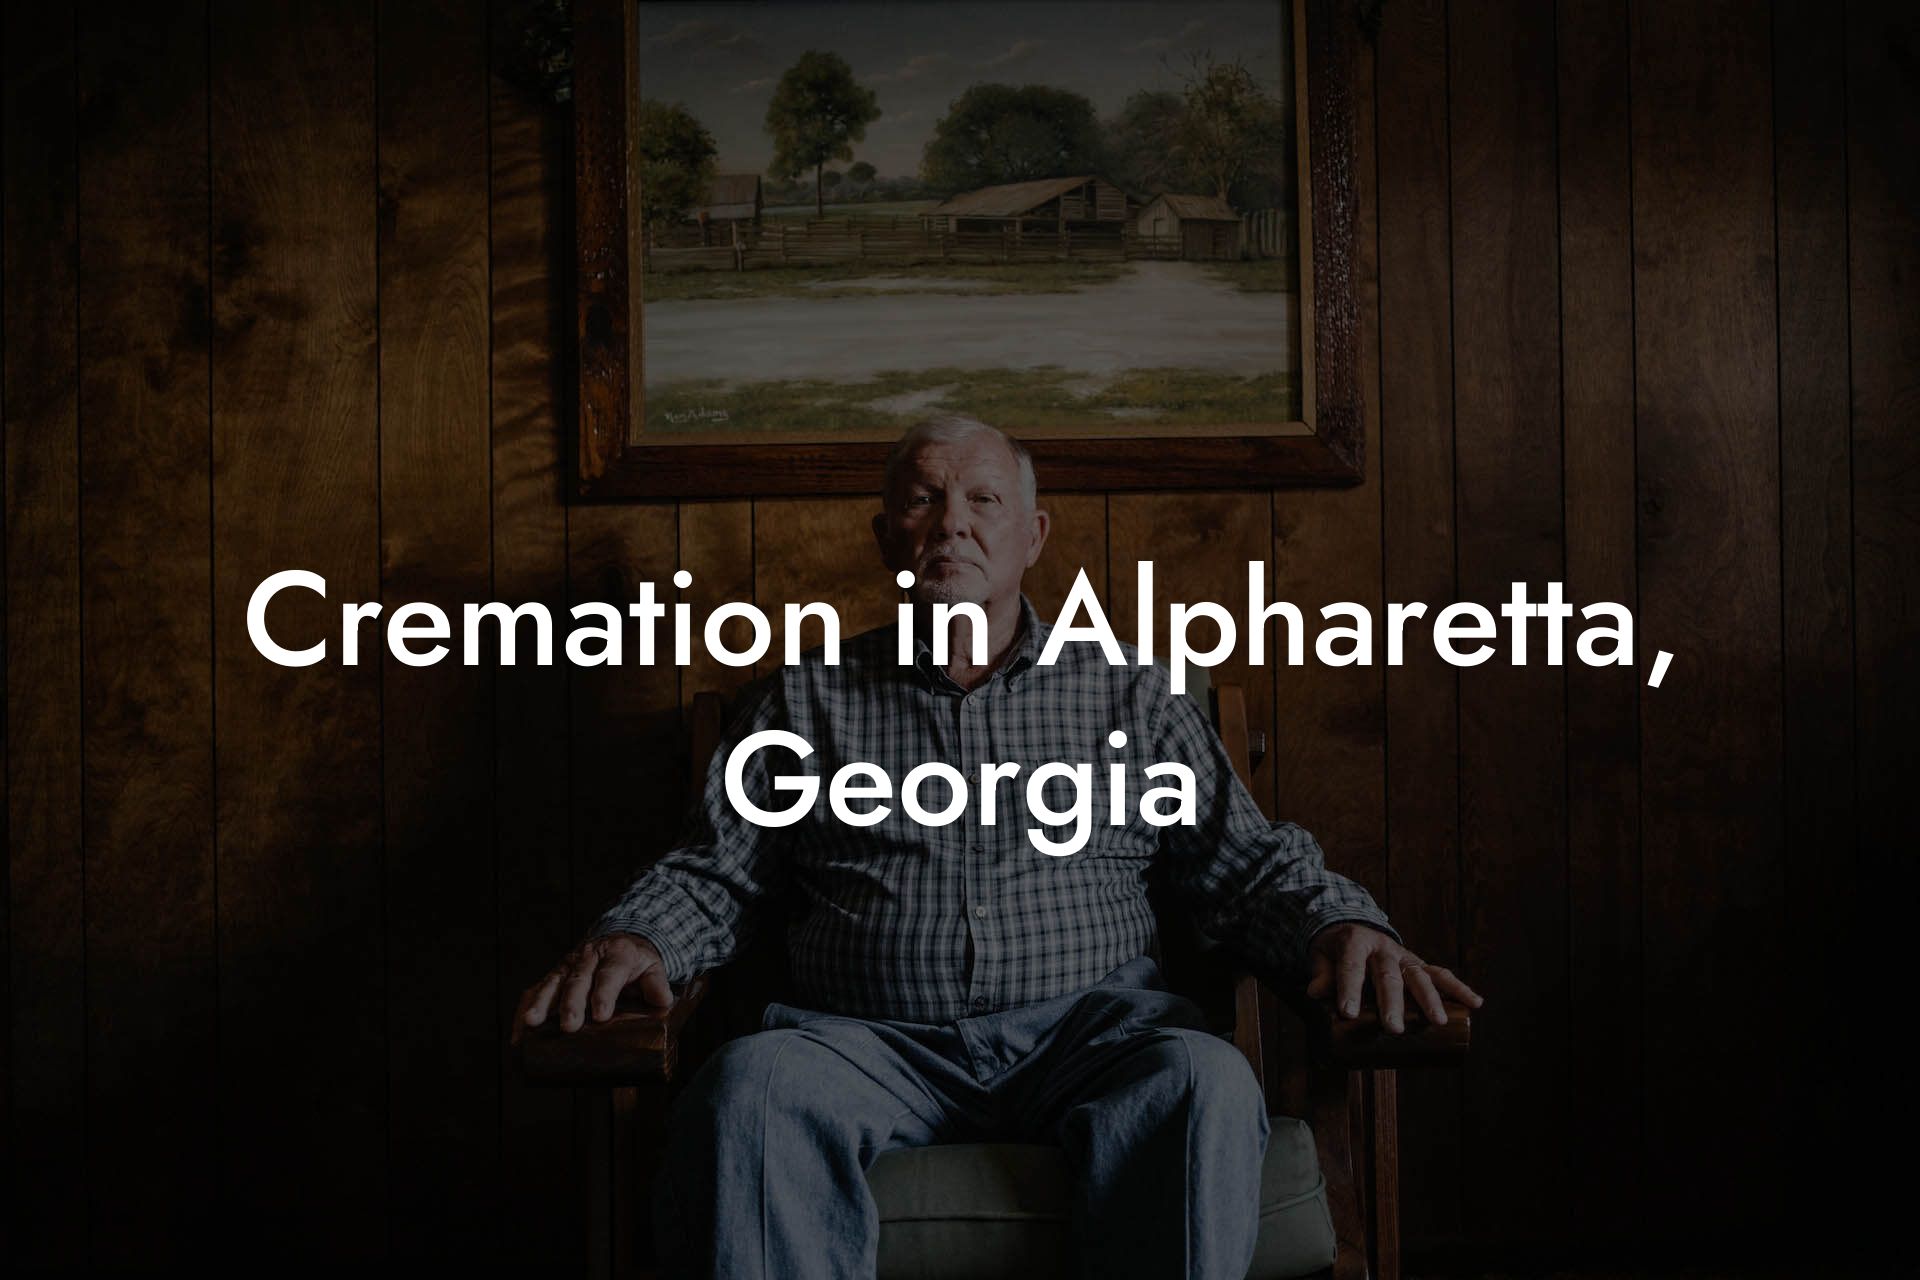 Cremation in Alpharetta, Georgia